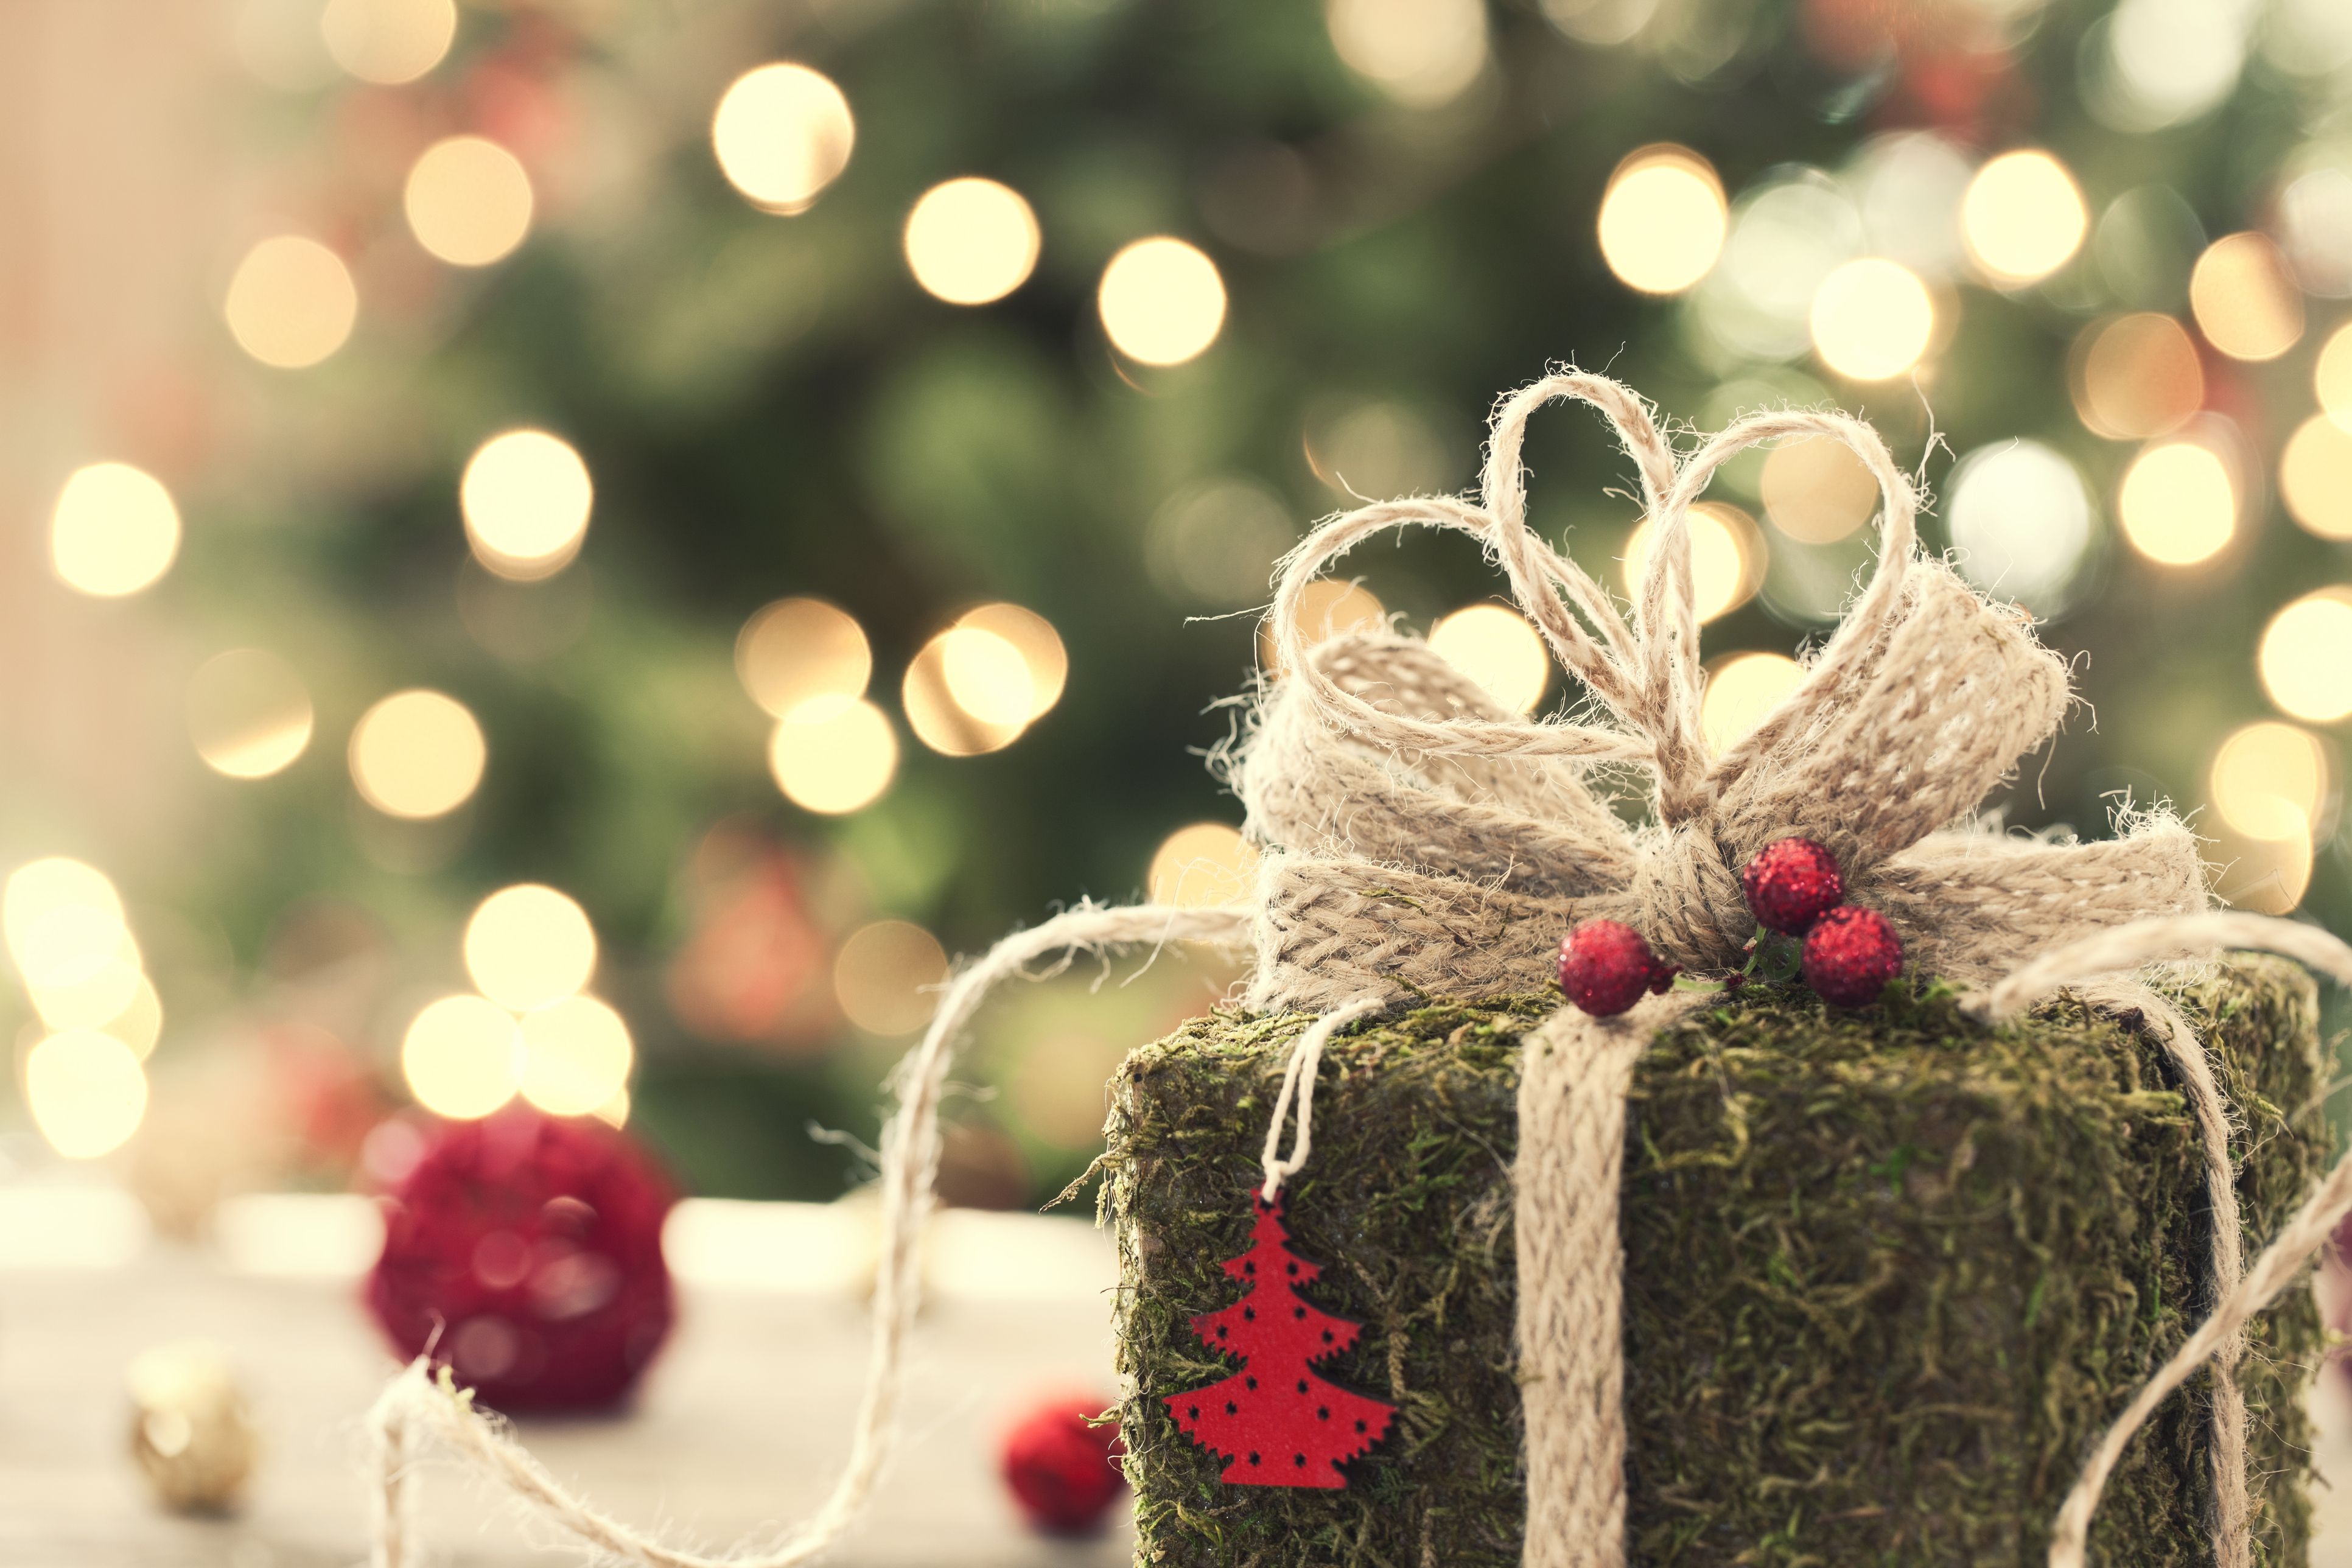 Pinterest Reveals Biggest Christmas Home Decor Ideas For